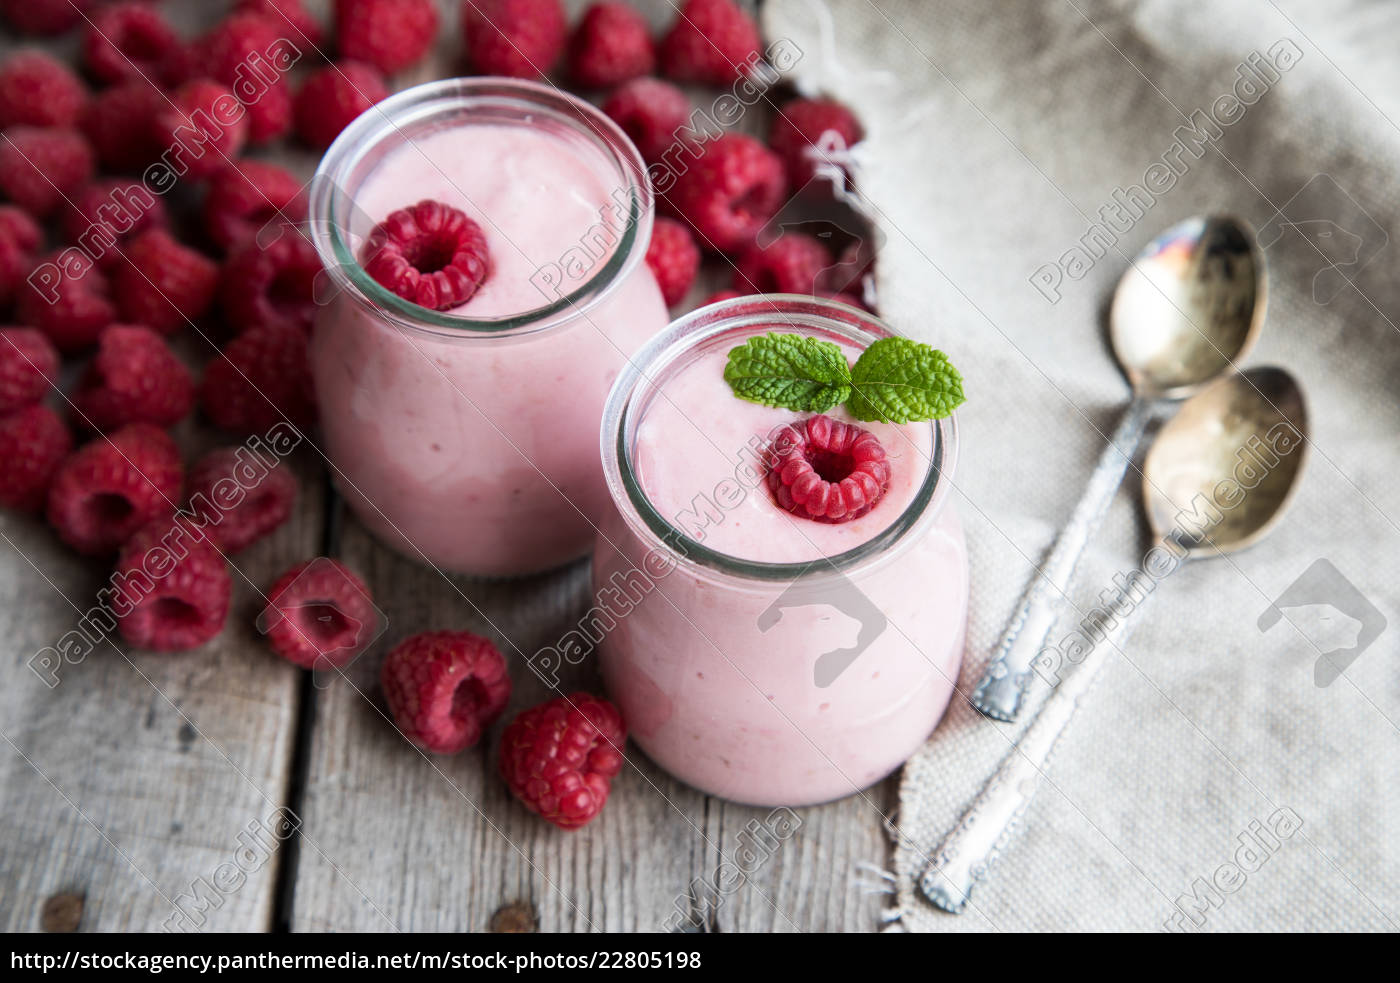 Joghurt-Smoothie mit Himbeeren Fruchtdessert. - Stock Photo - #22805198 ...